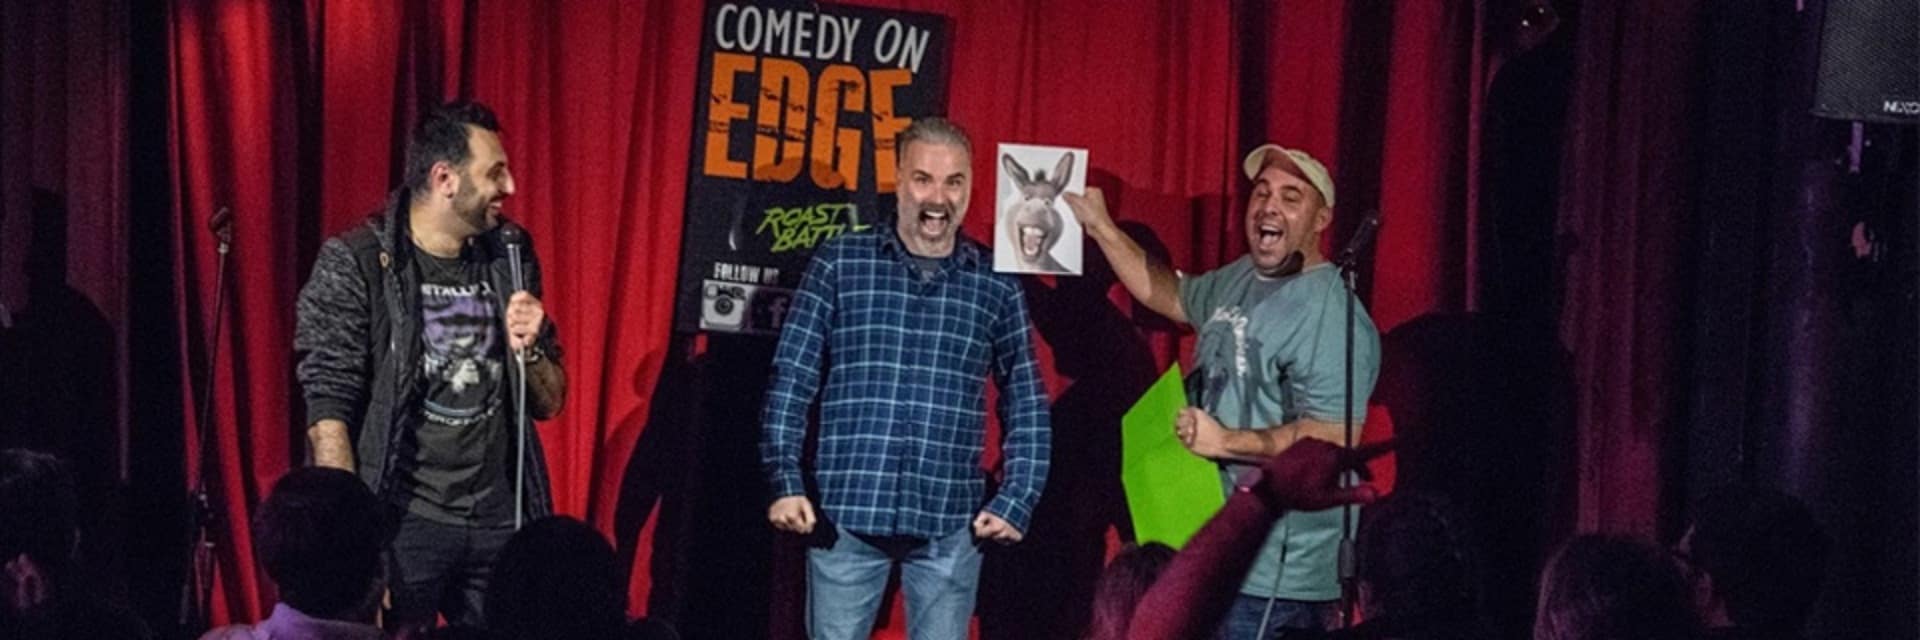 Edge Comedy Club in UK